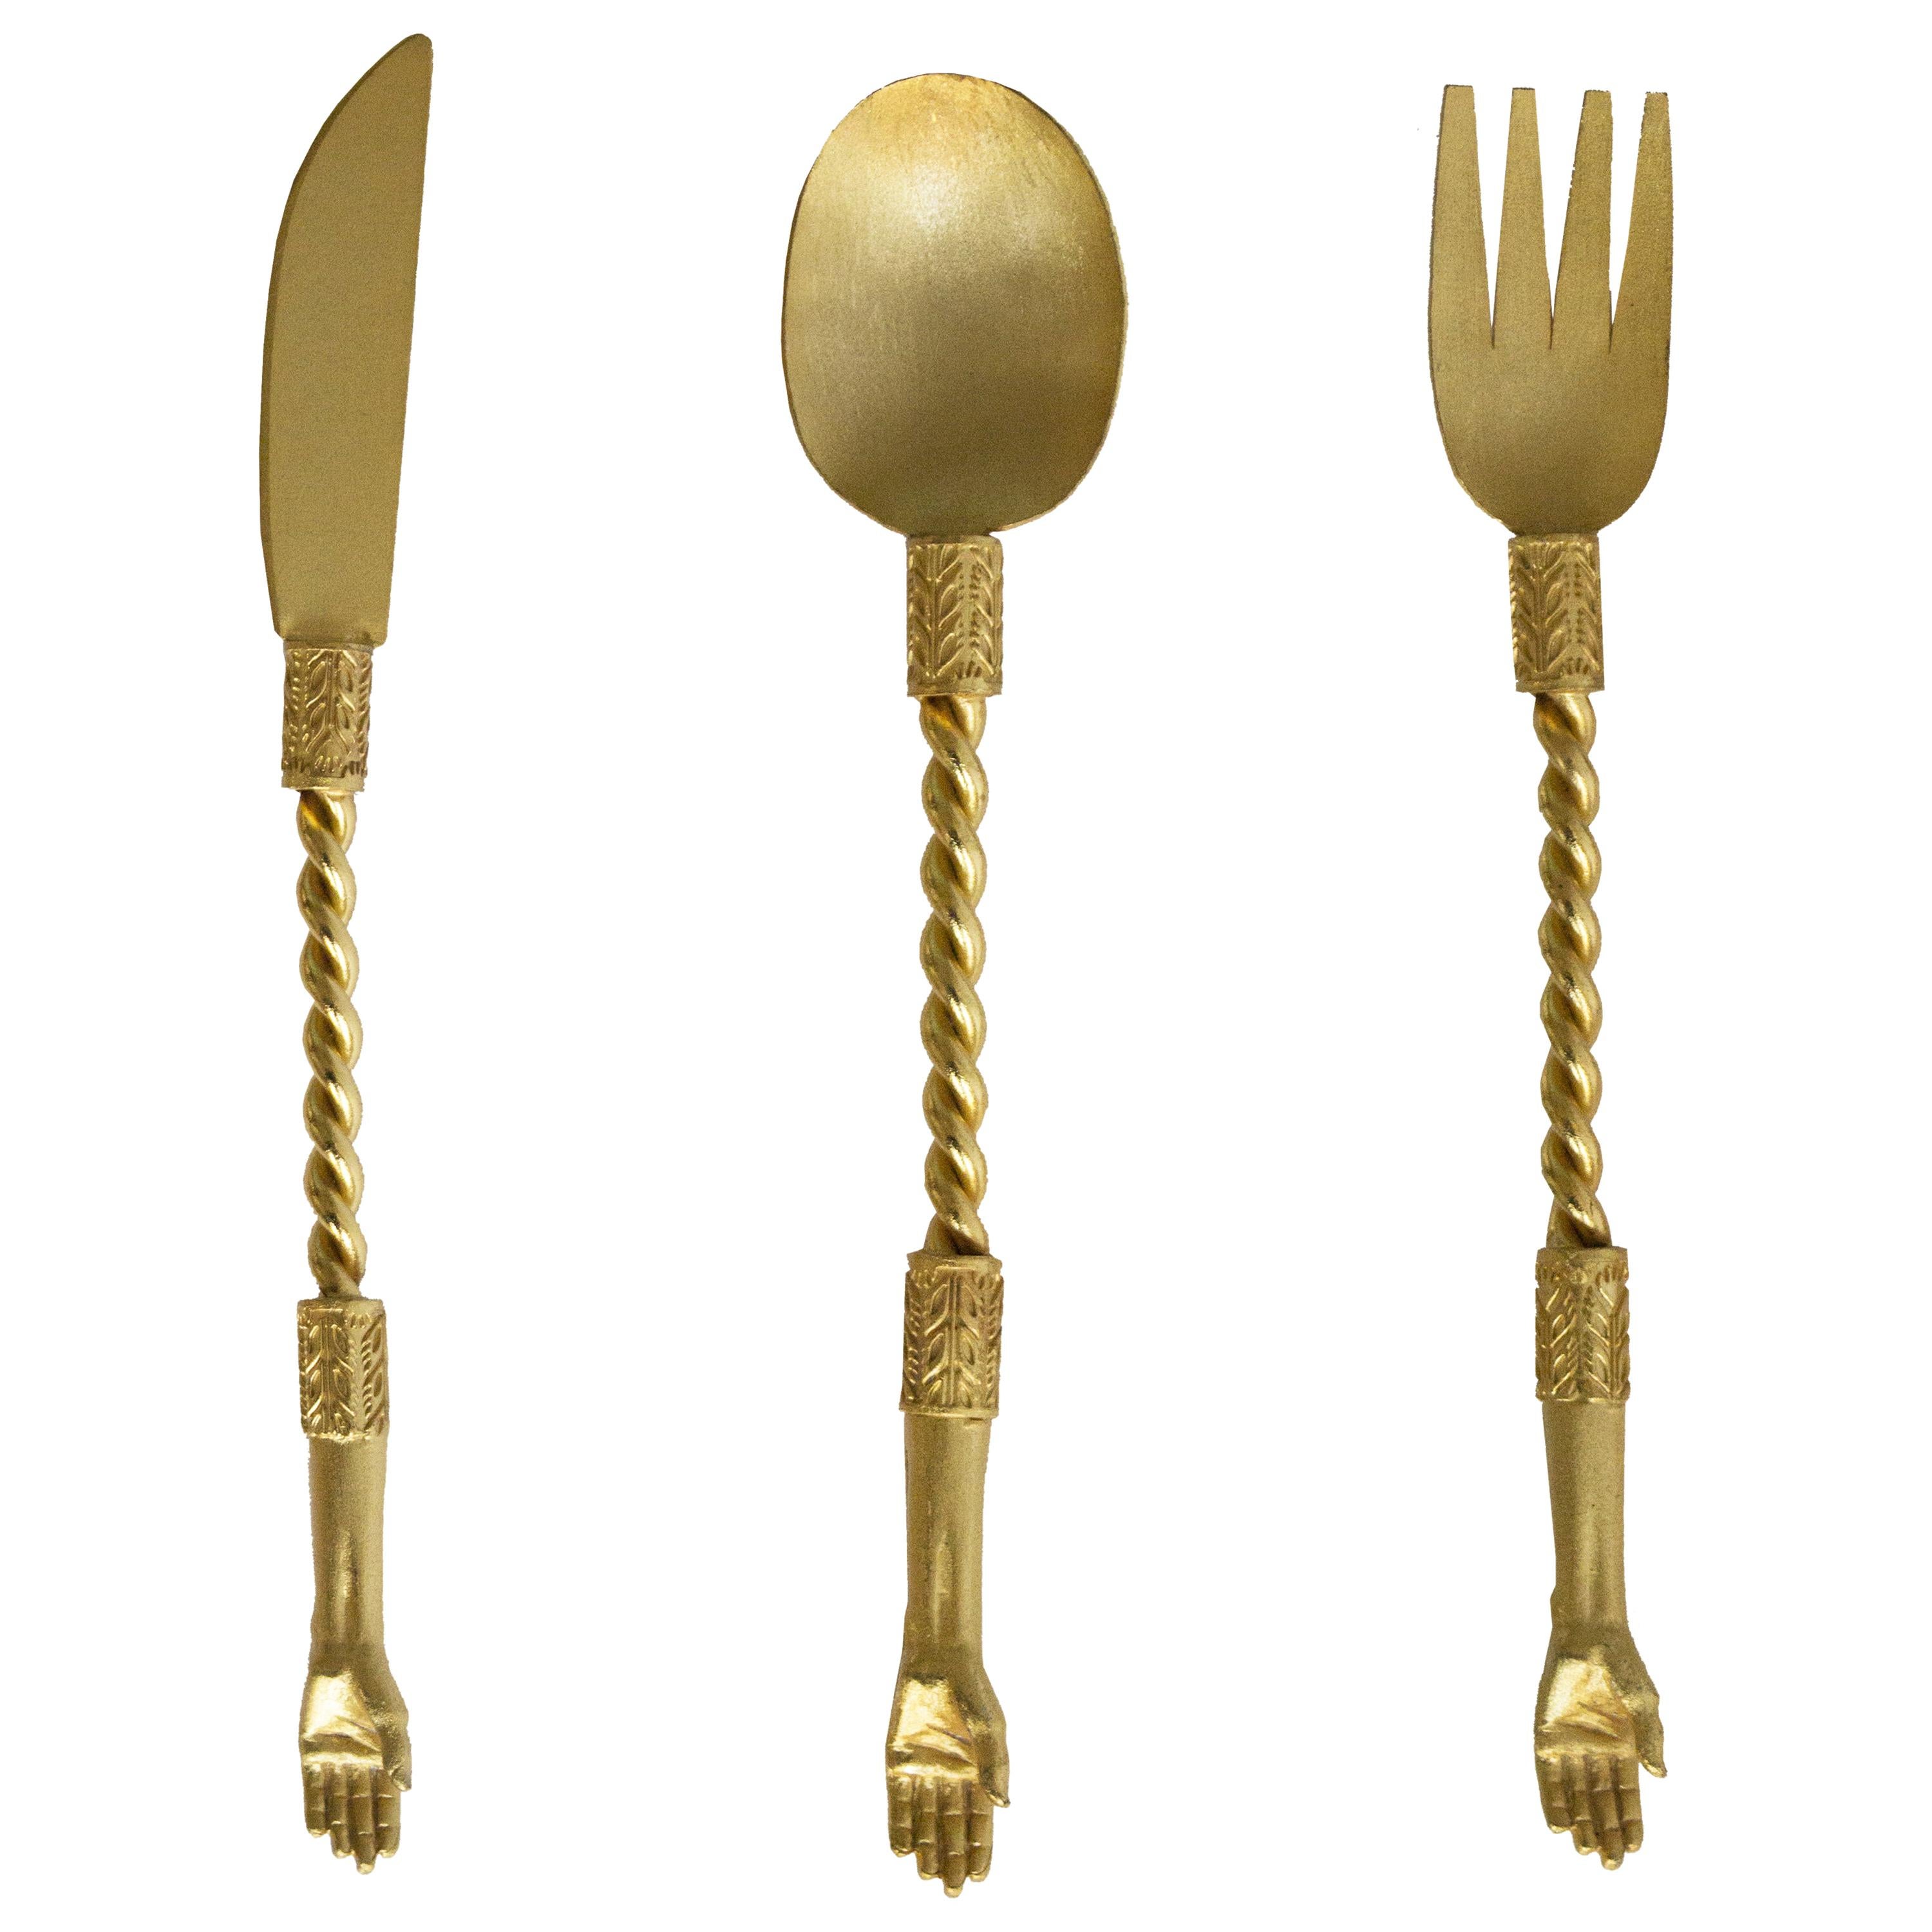 Contemporary Cutlery Servers Golden Plated Handcrafted Italy Natalia Criado